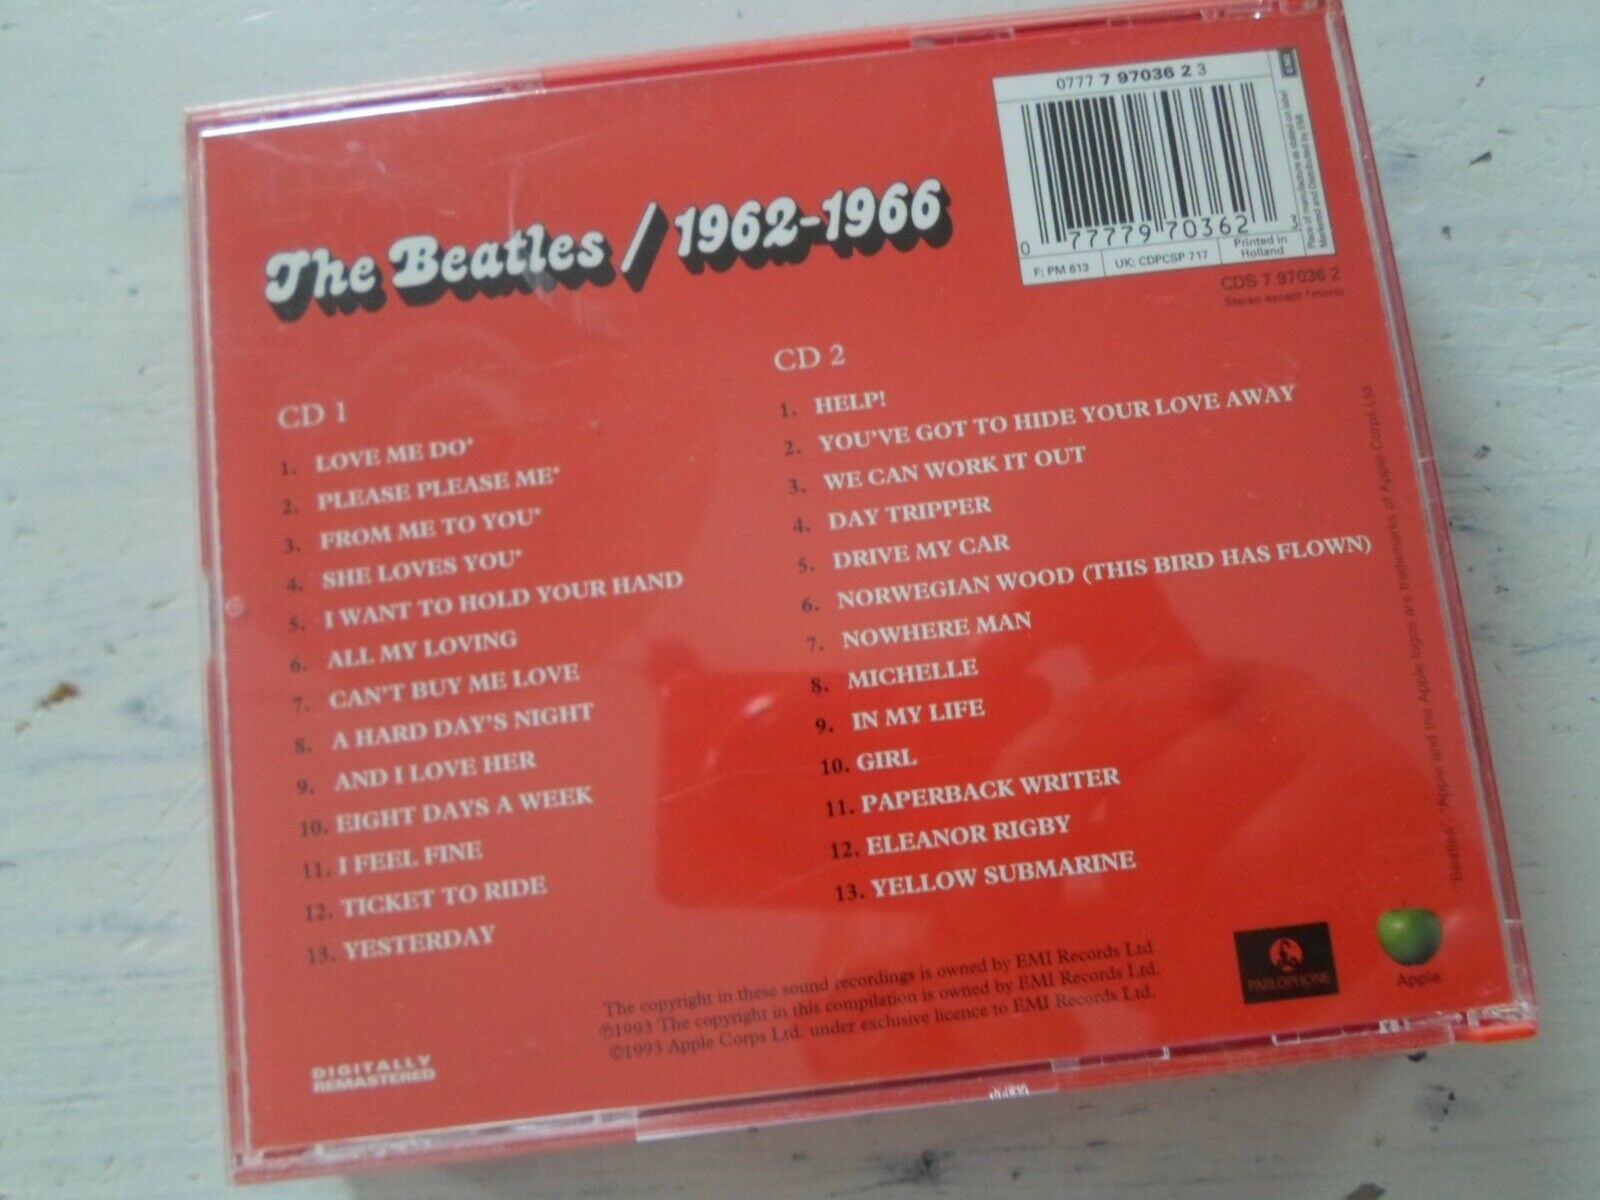 The beatles: 1962-1966, rock